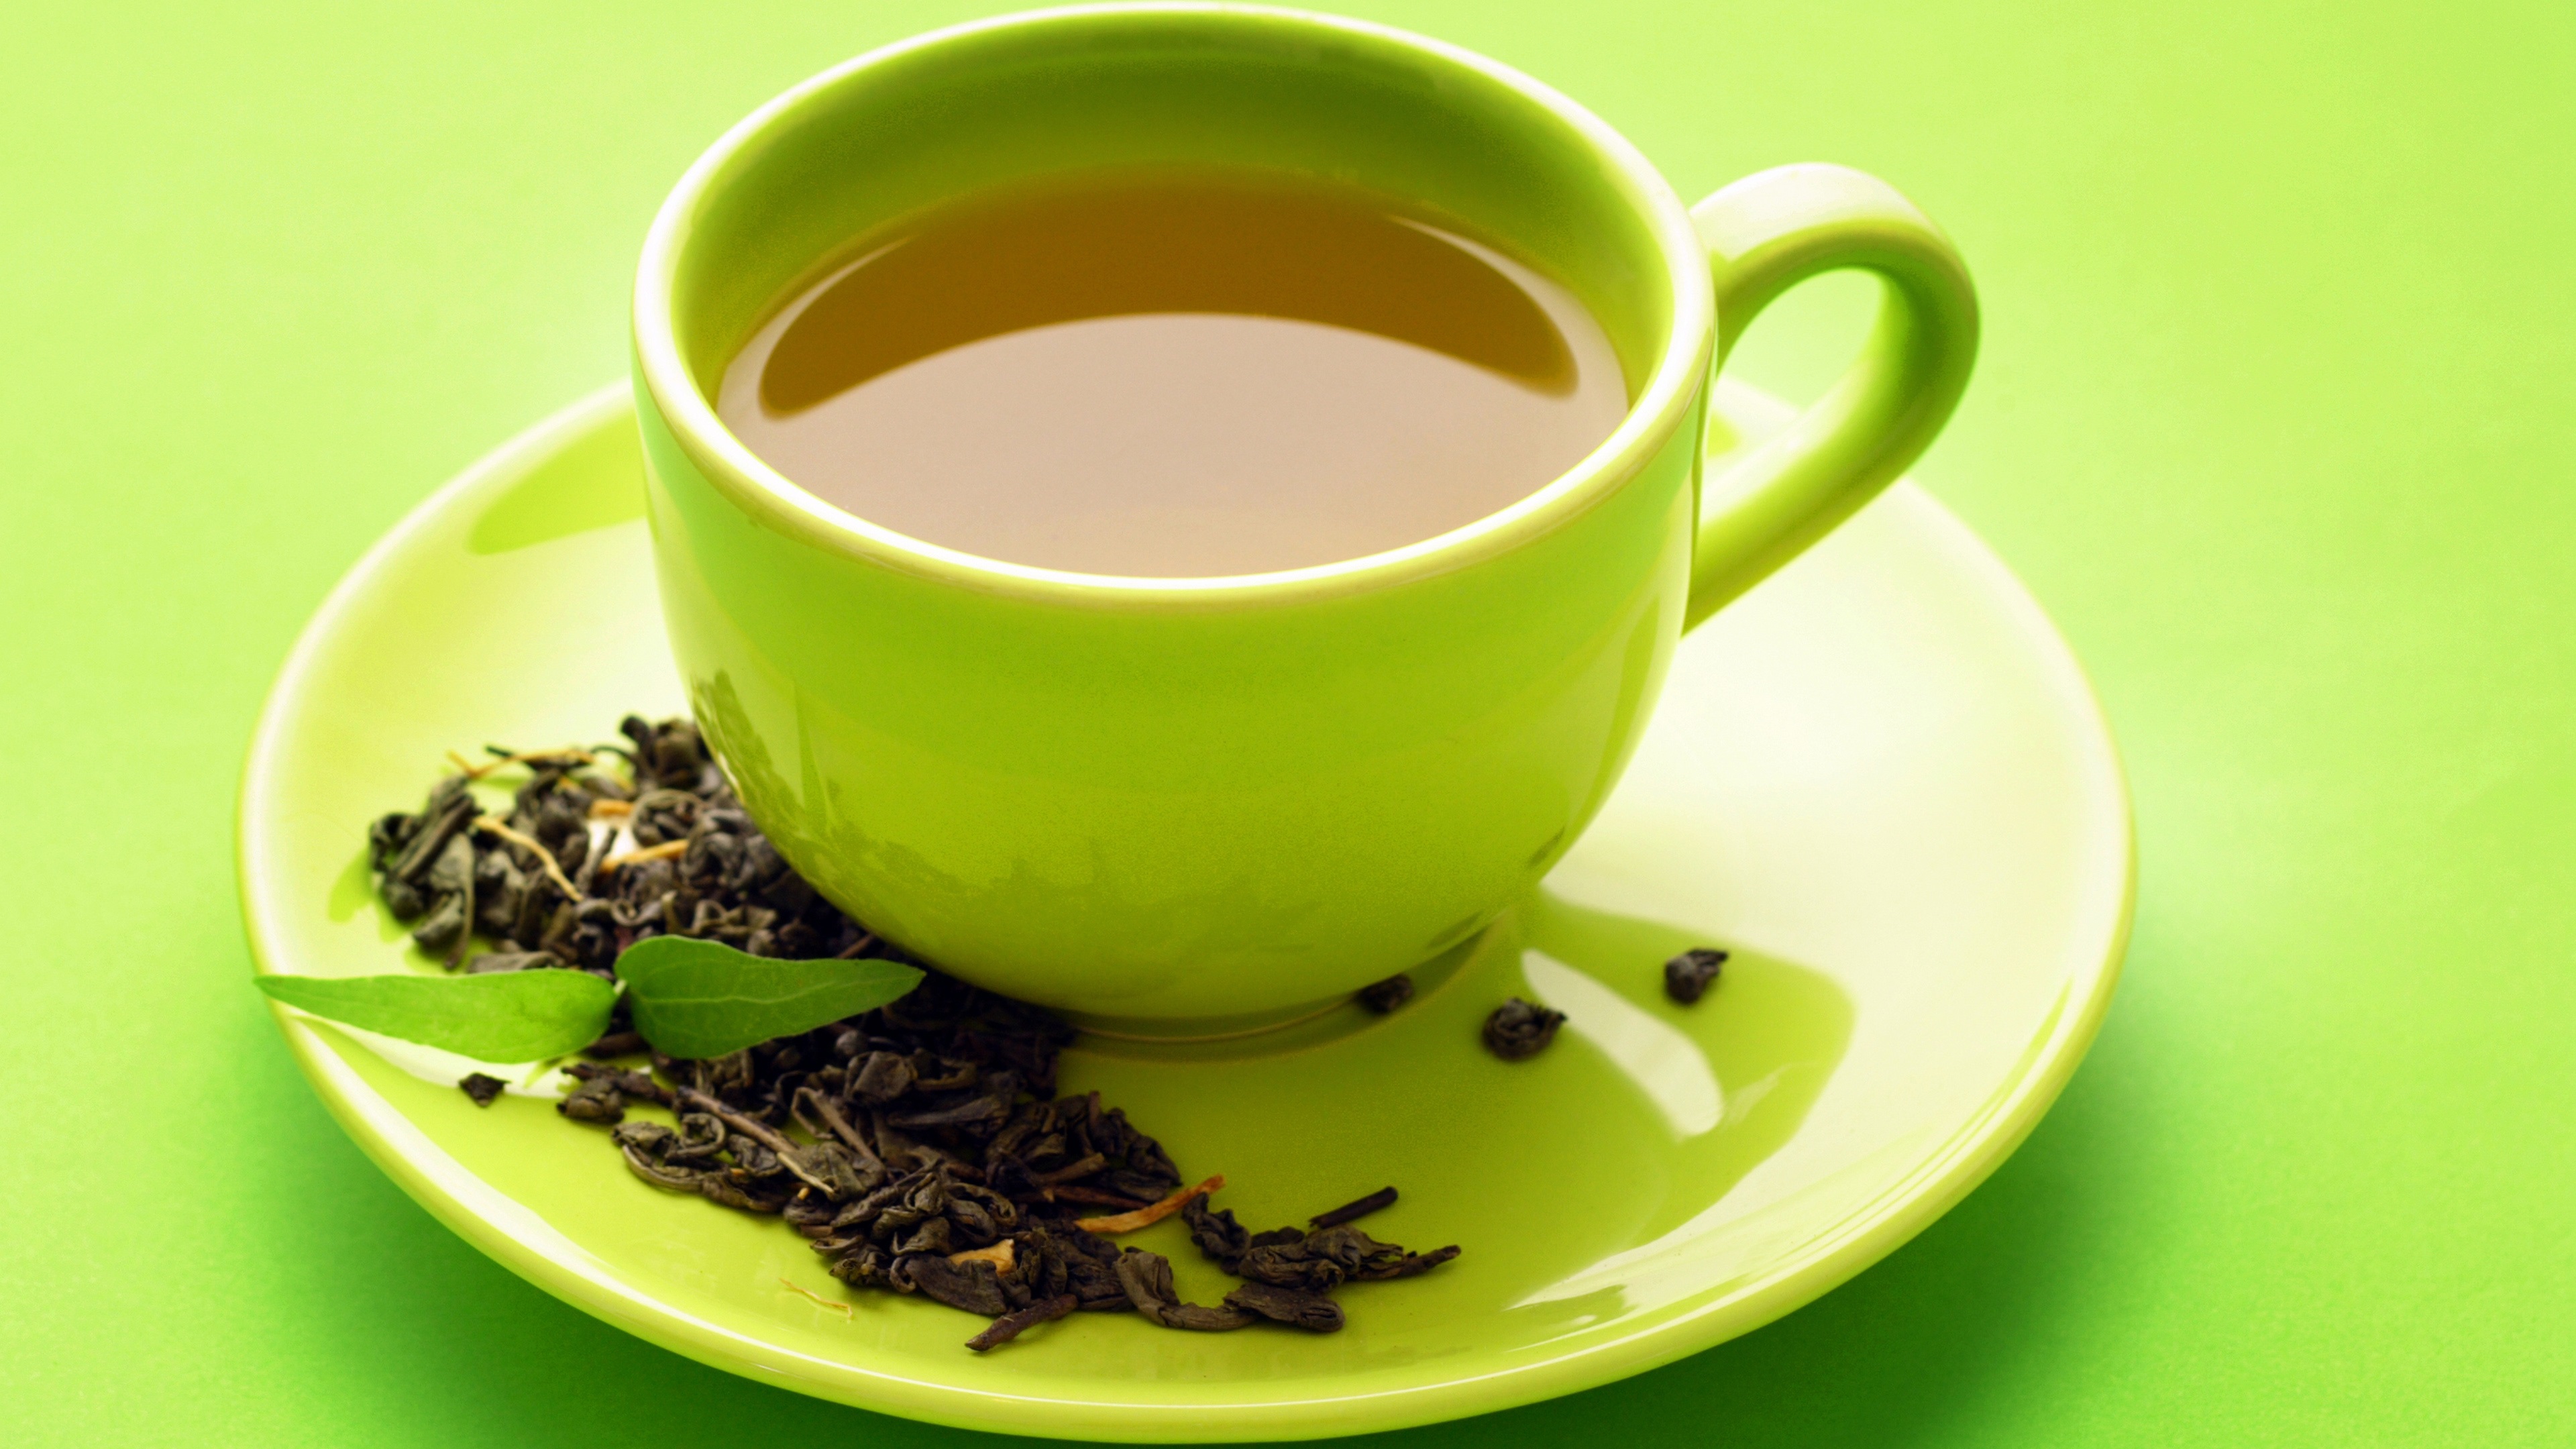 green tea wallpaper,cup,cup,drink,dandelion coffee,coffee cup